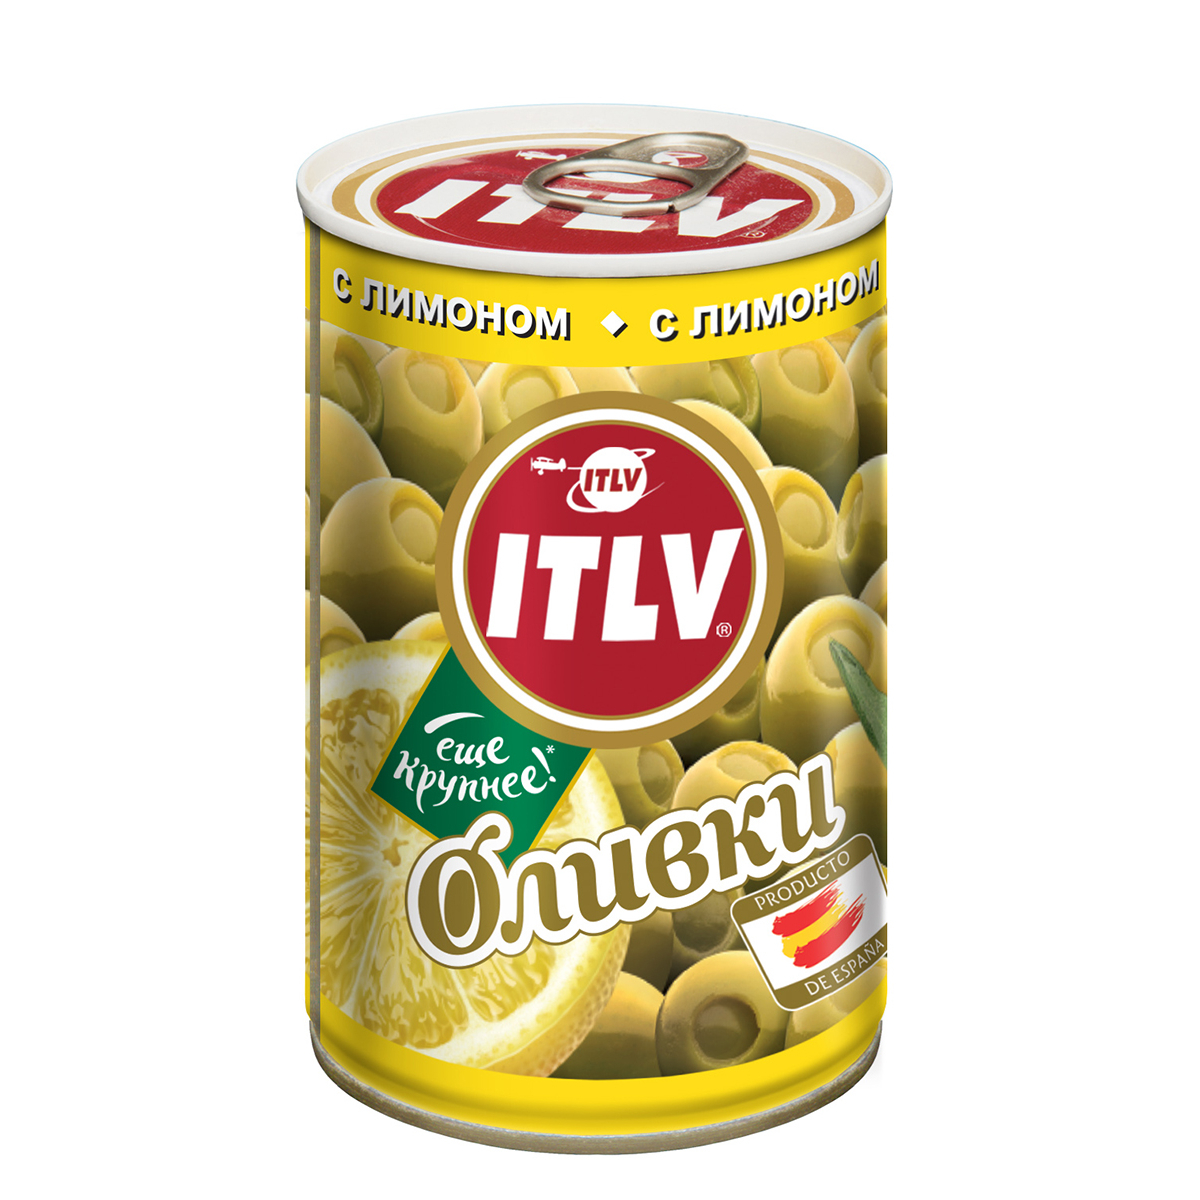 Оливки ITLV с лимоном 314 мл оливки itlv без косточки 314 мл